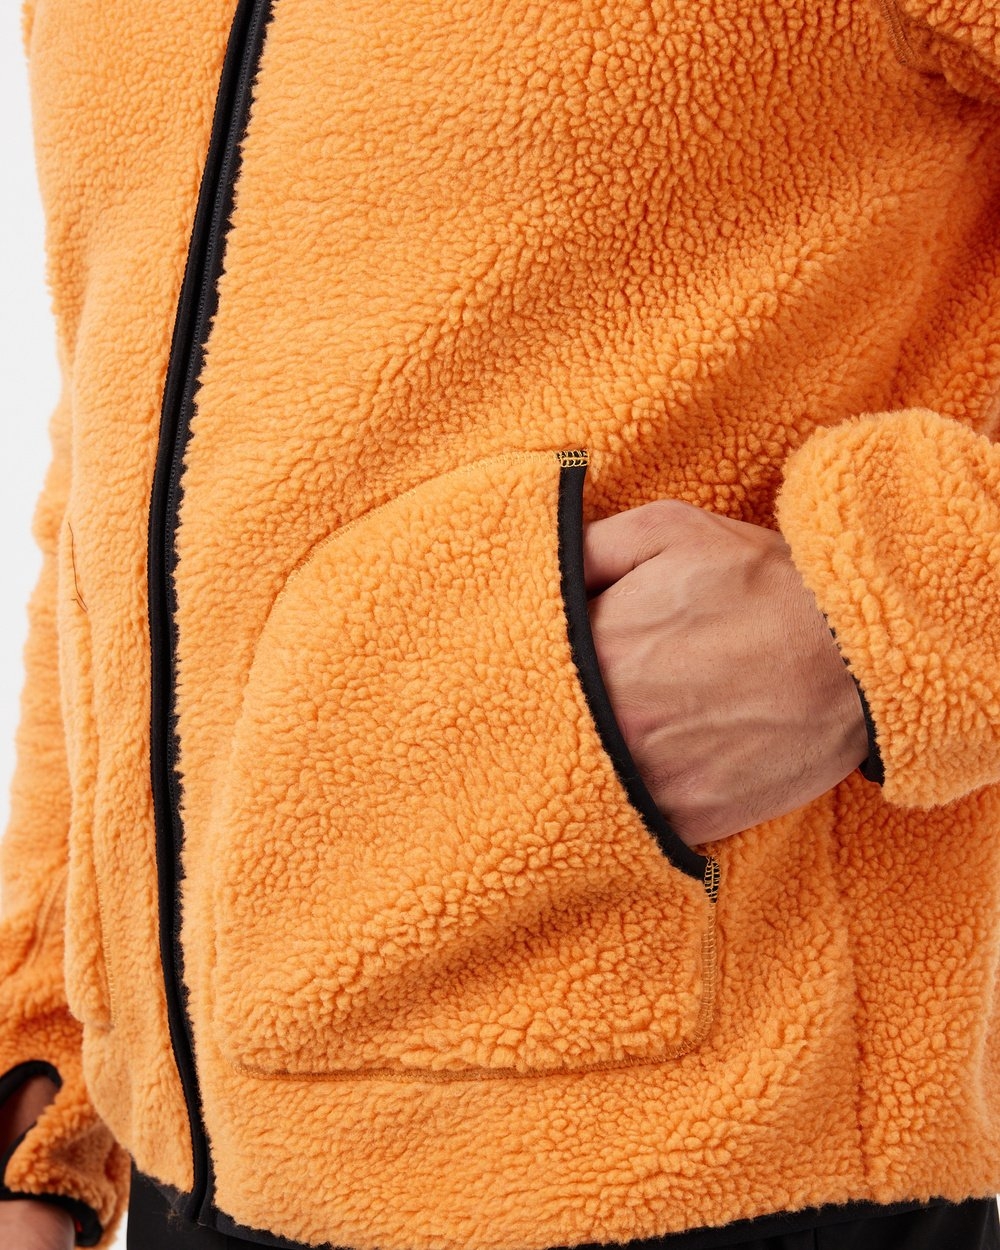 Terra Fleece Pile Jacket - Orange Peel